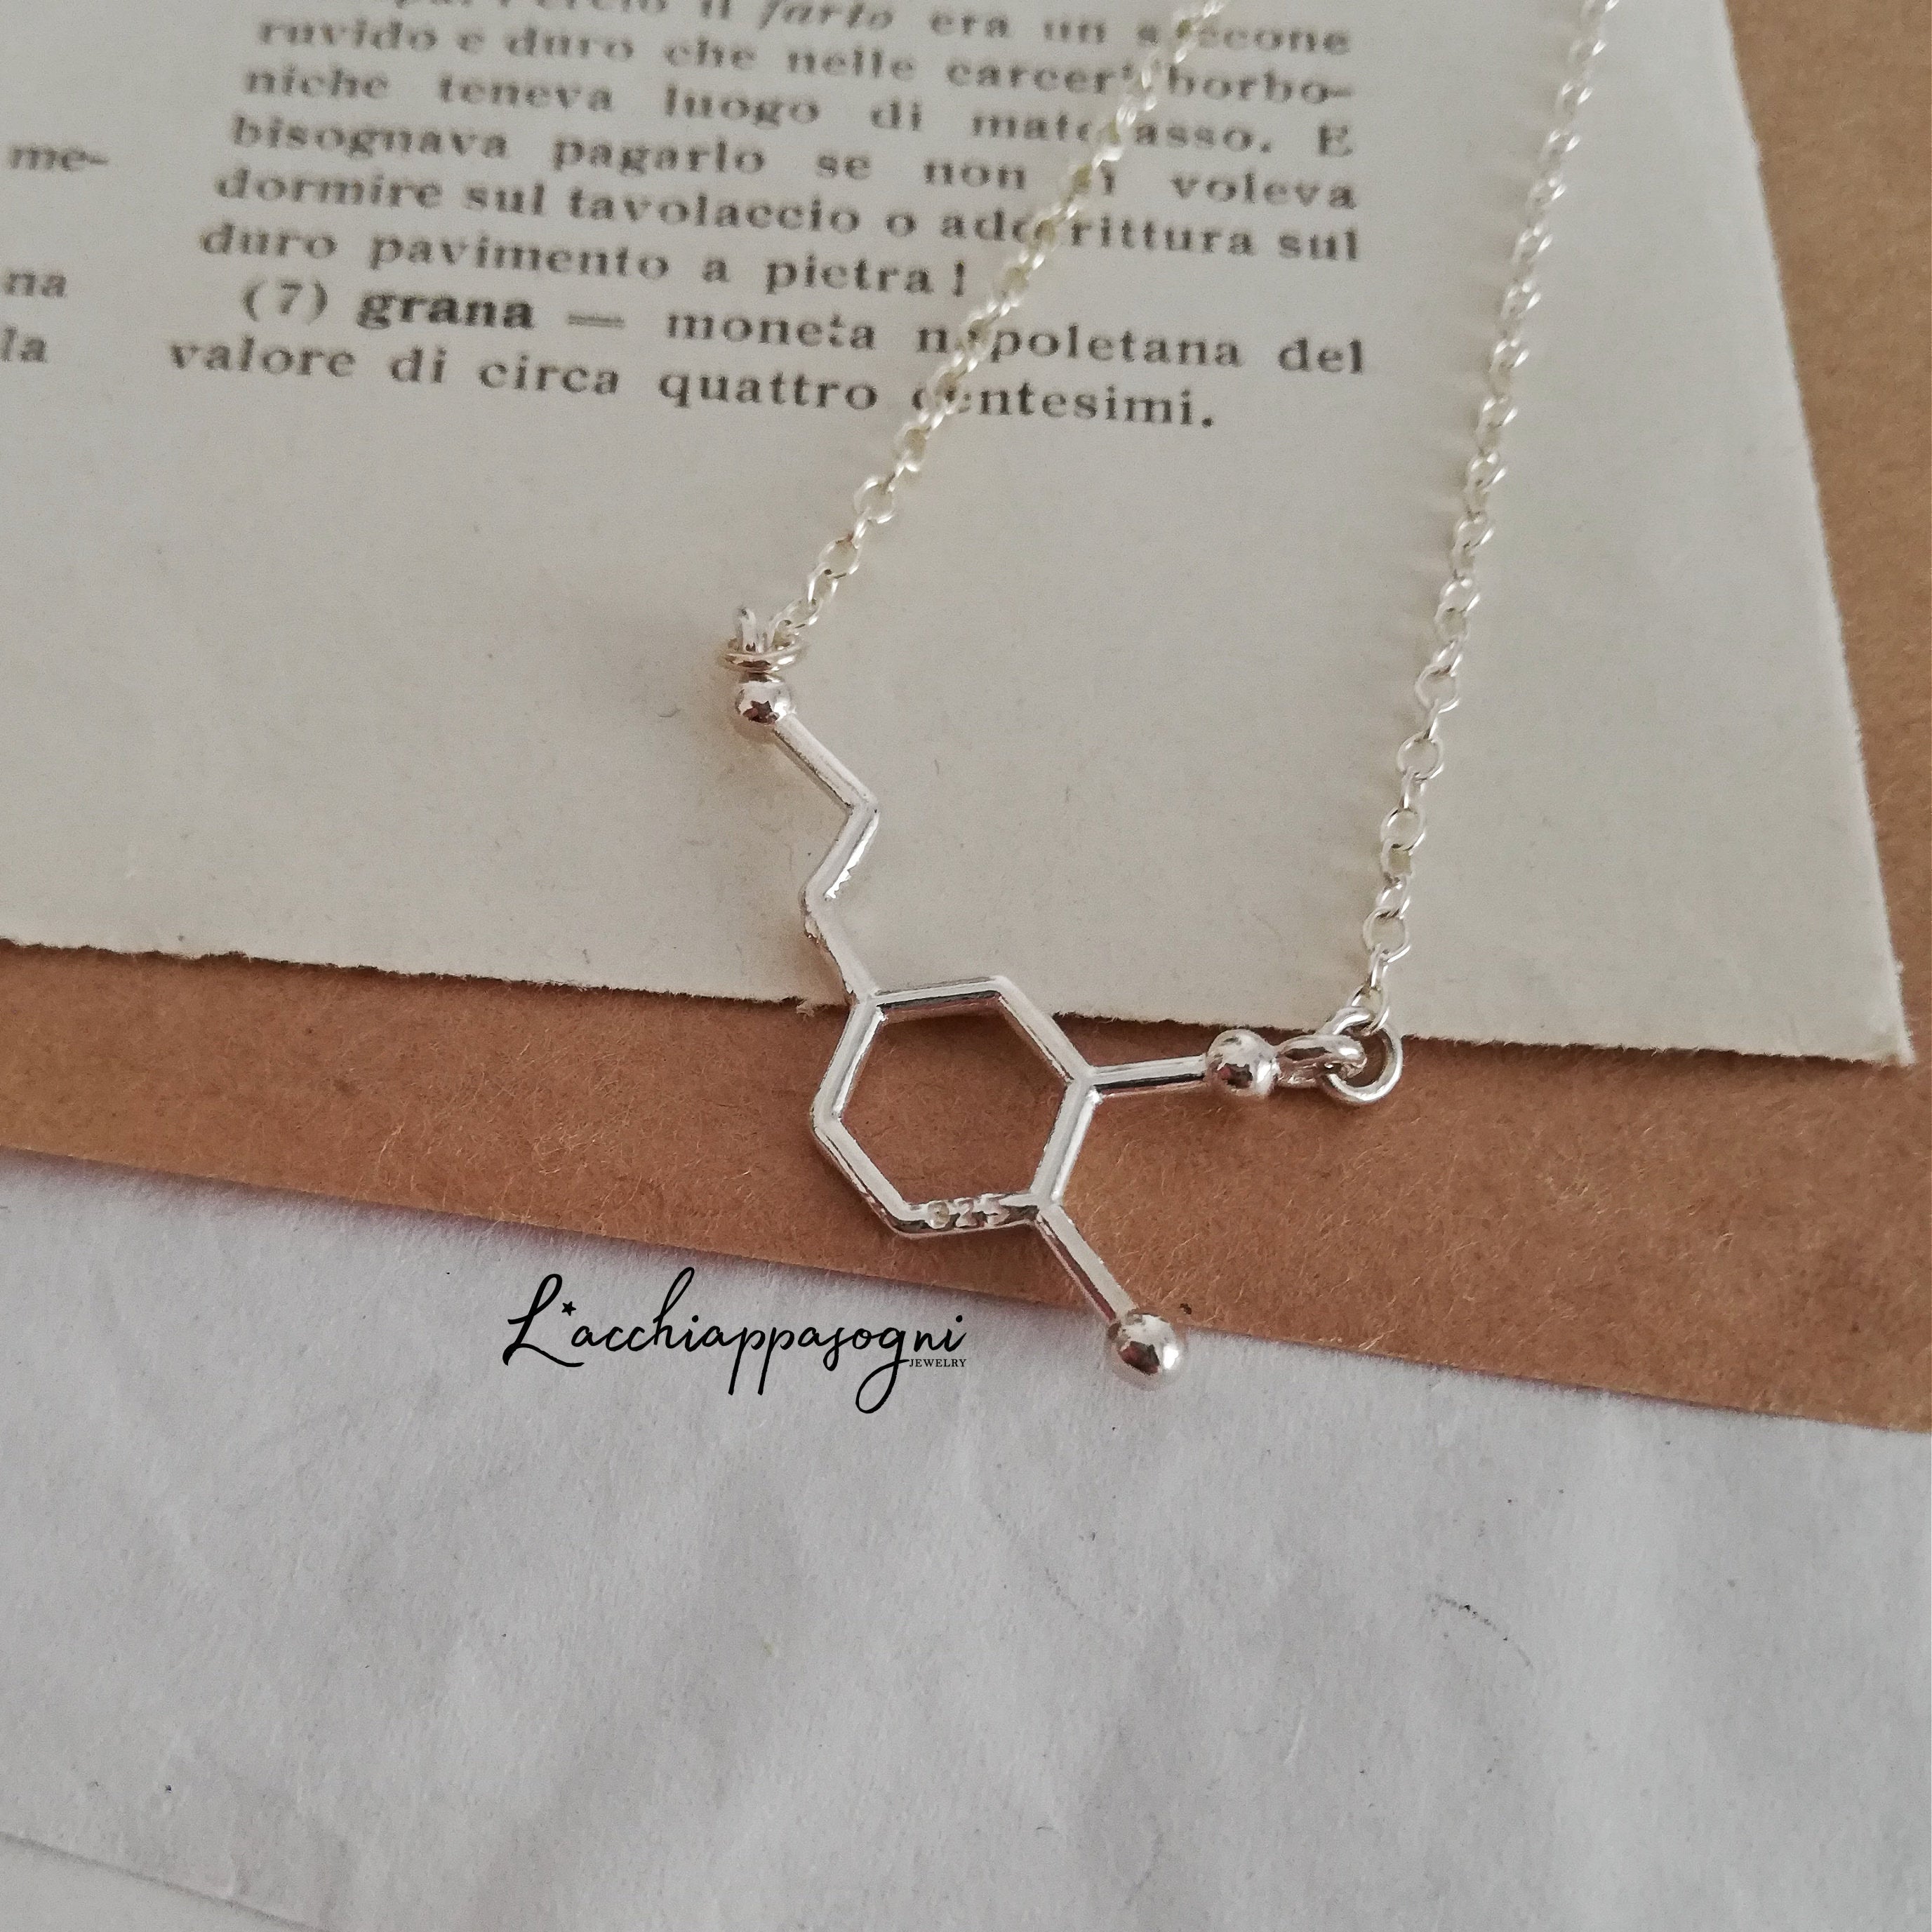 Earthbound Serotonin Molecule Necklace Bought new... - Depop